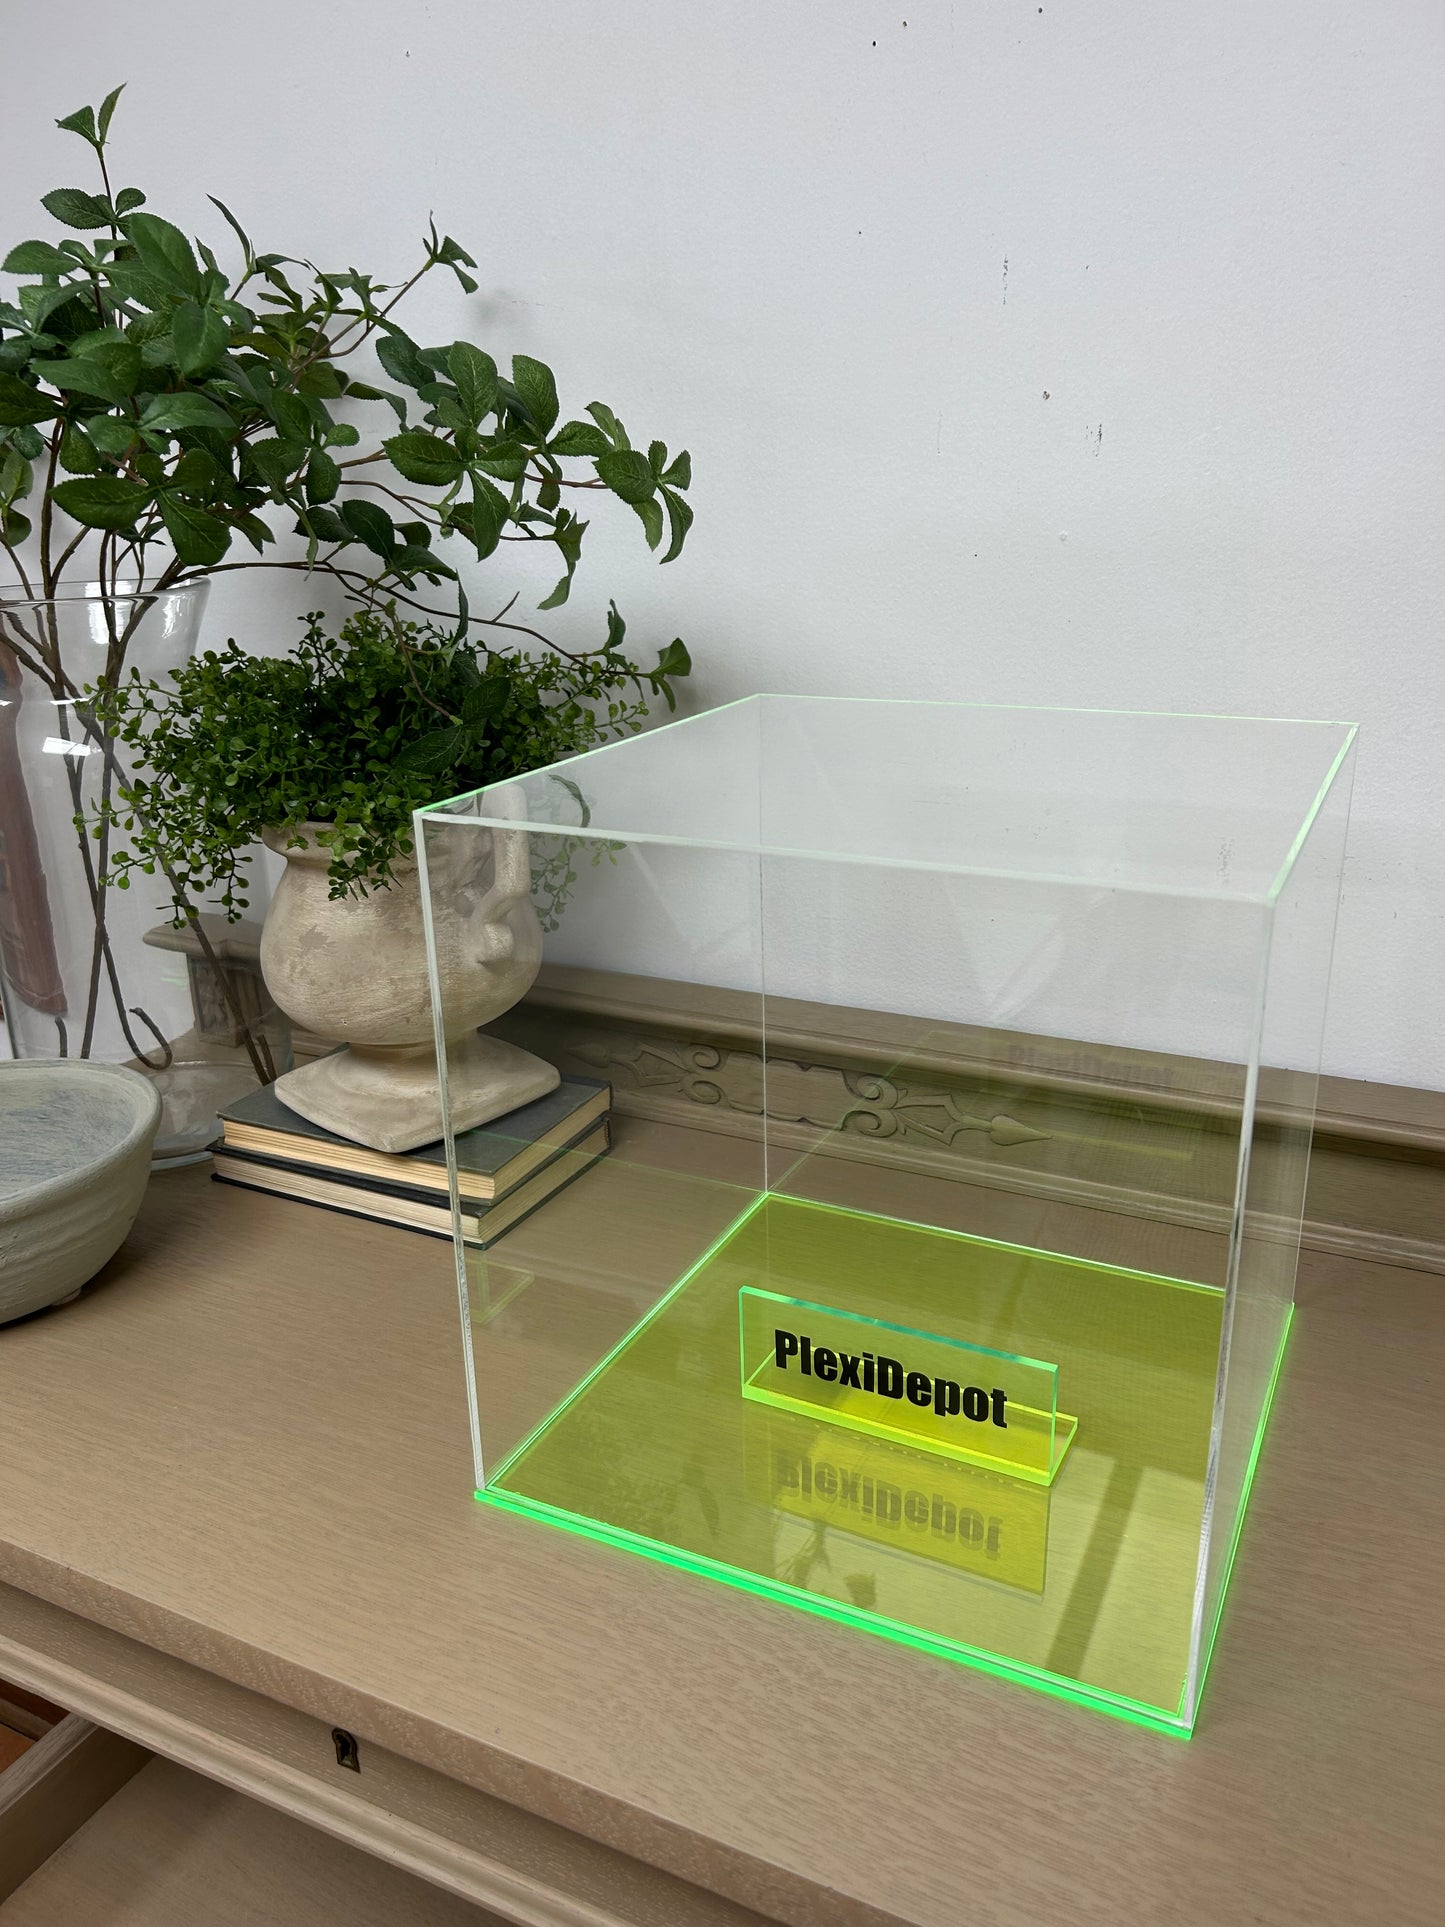 Acrylic 5-Sided Box w/ Fluorescent Green Acrylic Base